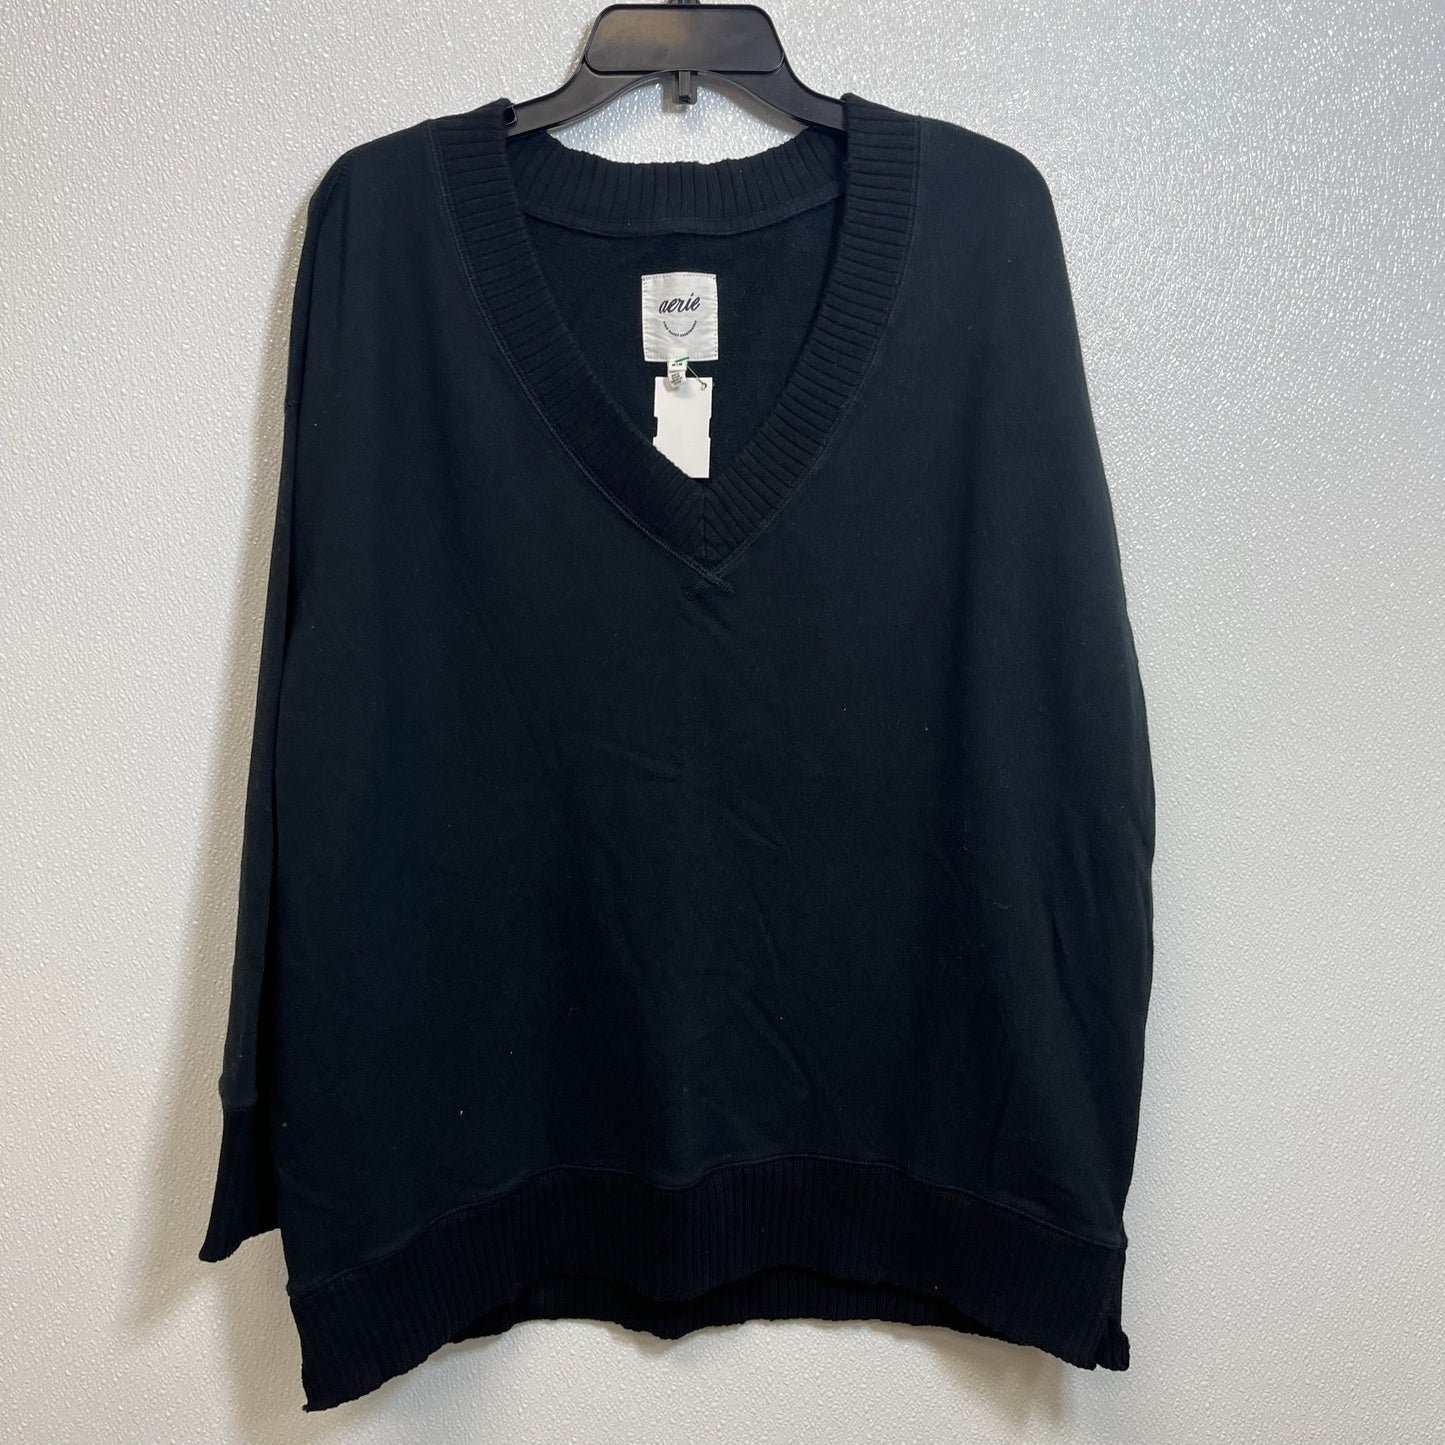 Black Sweatshirt Crewneck Aerie, Size M